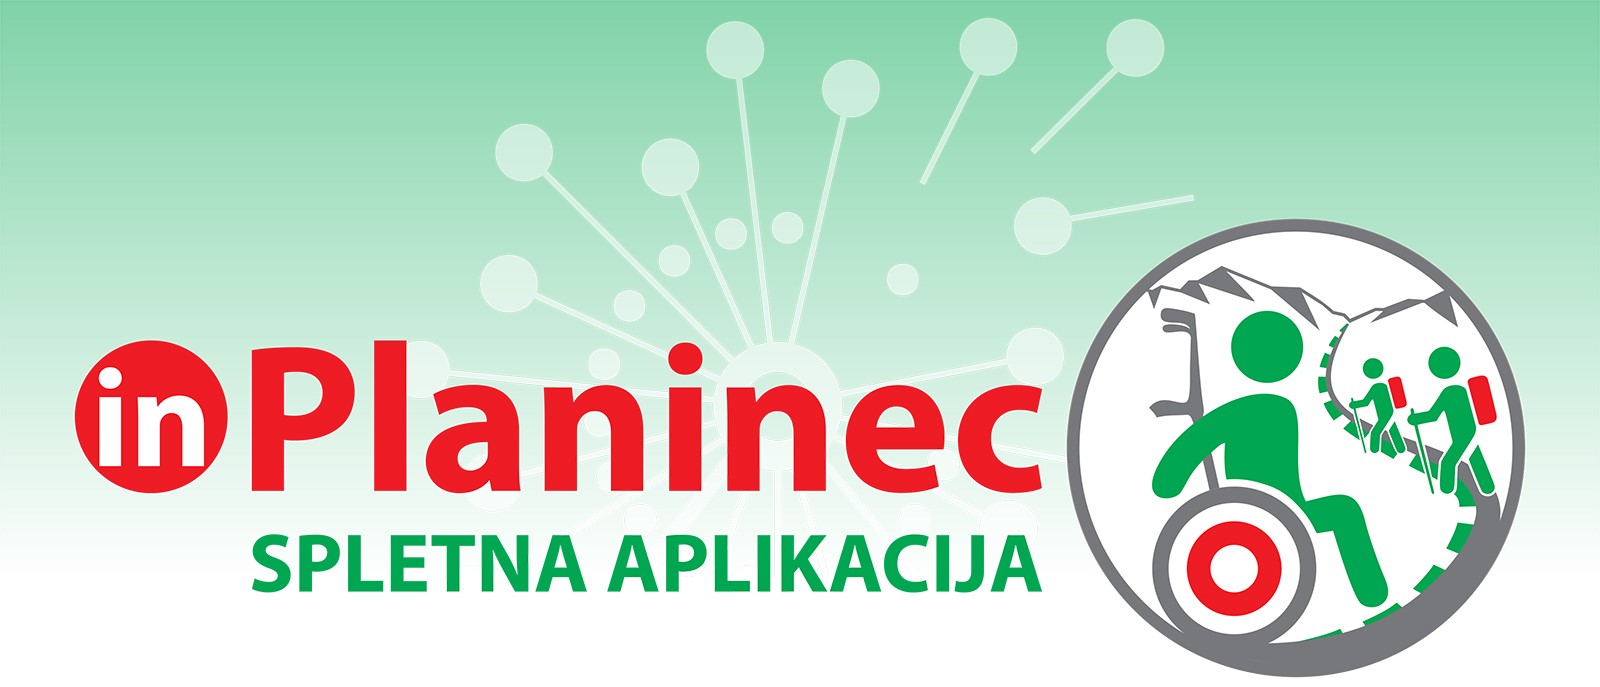 inPlaninec_banner_APLIKACIJA